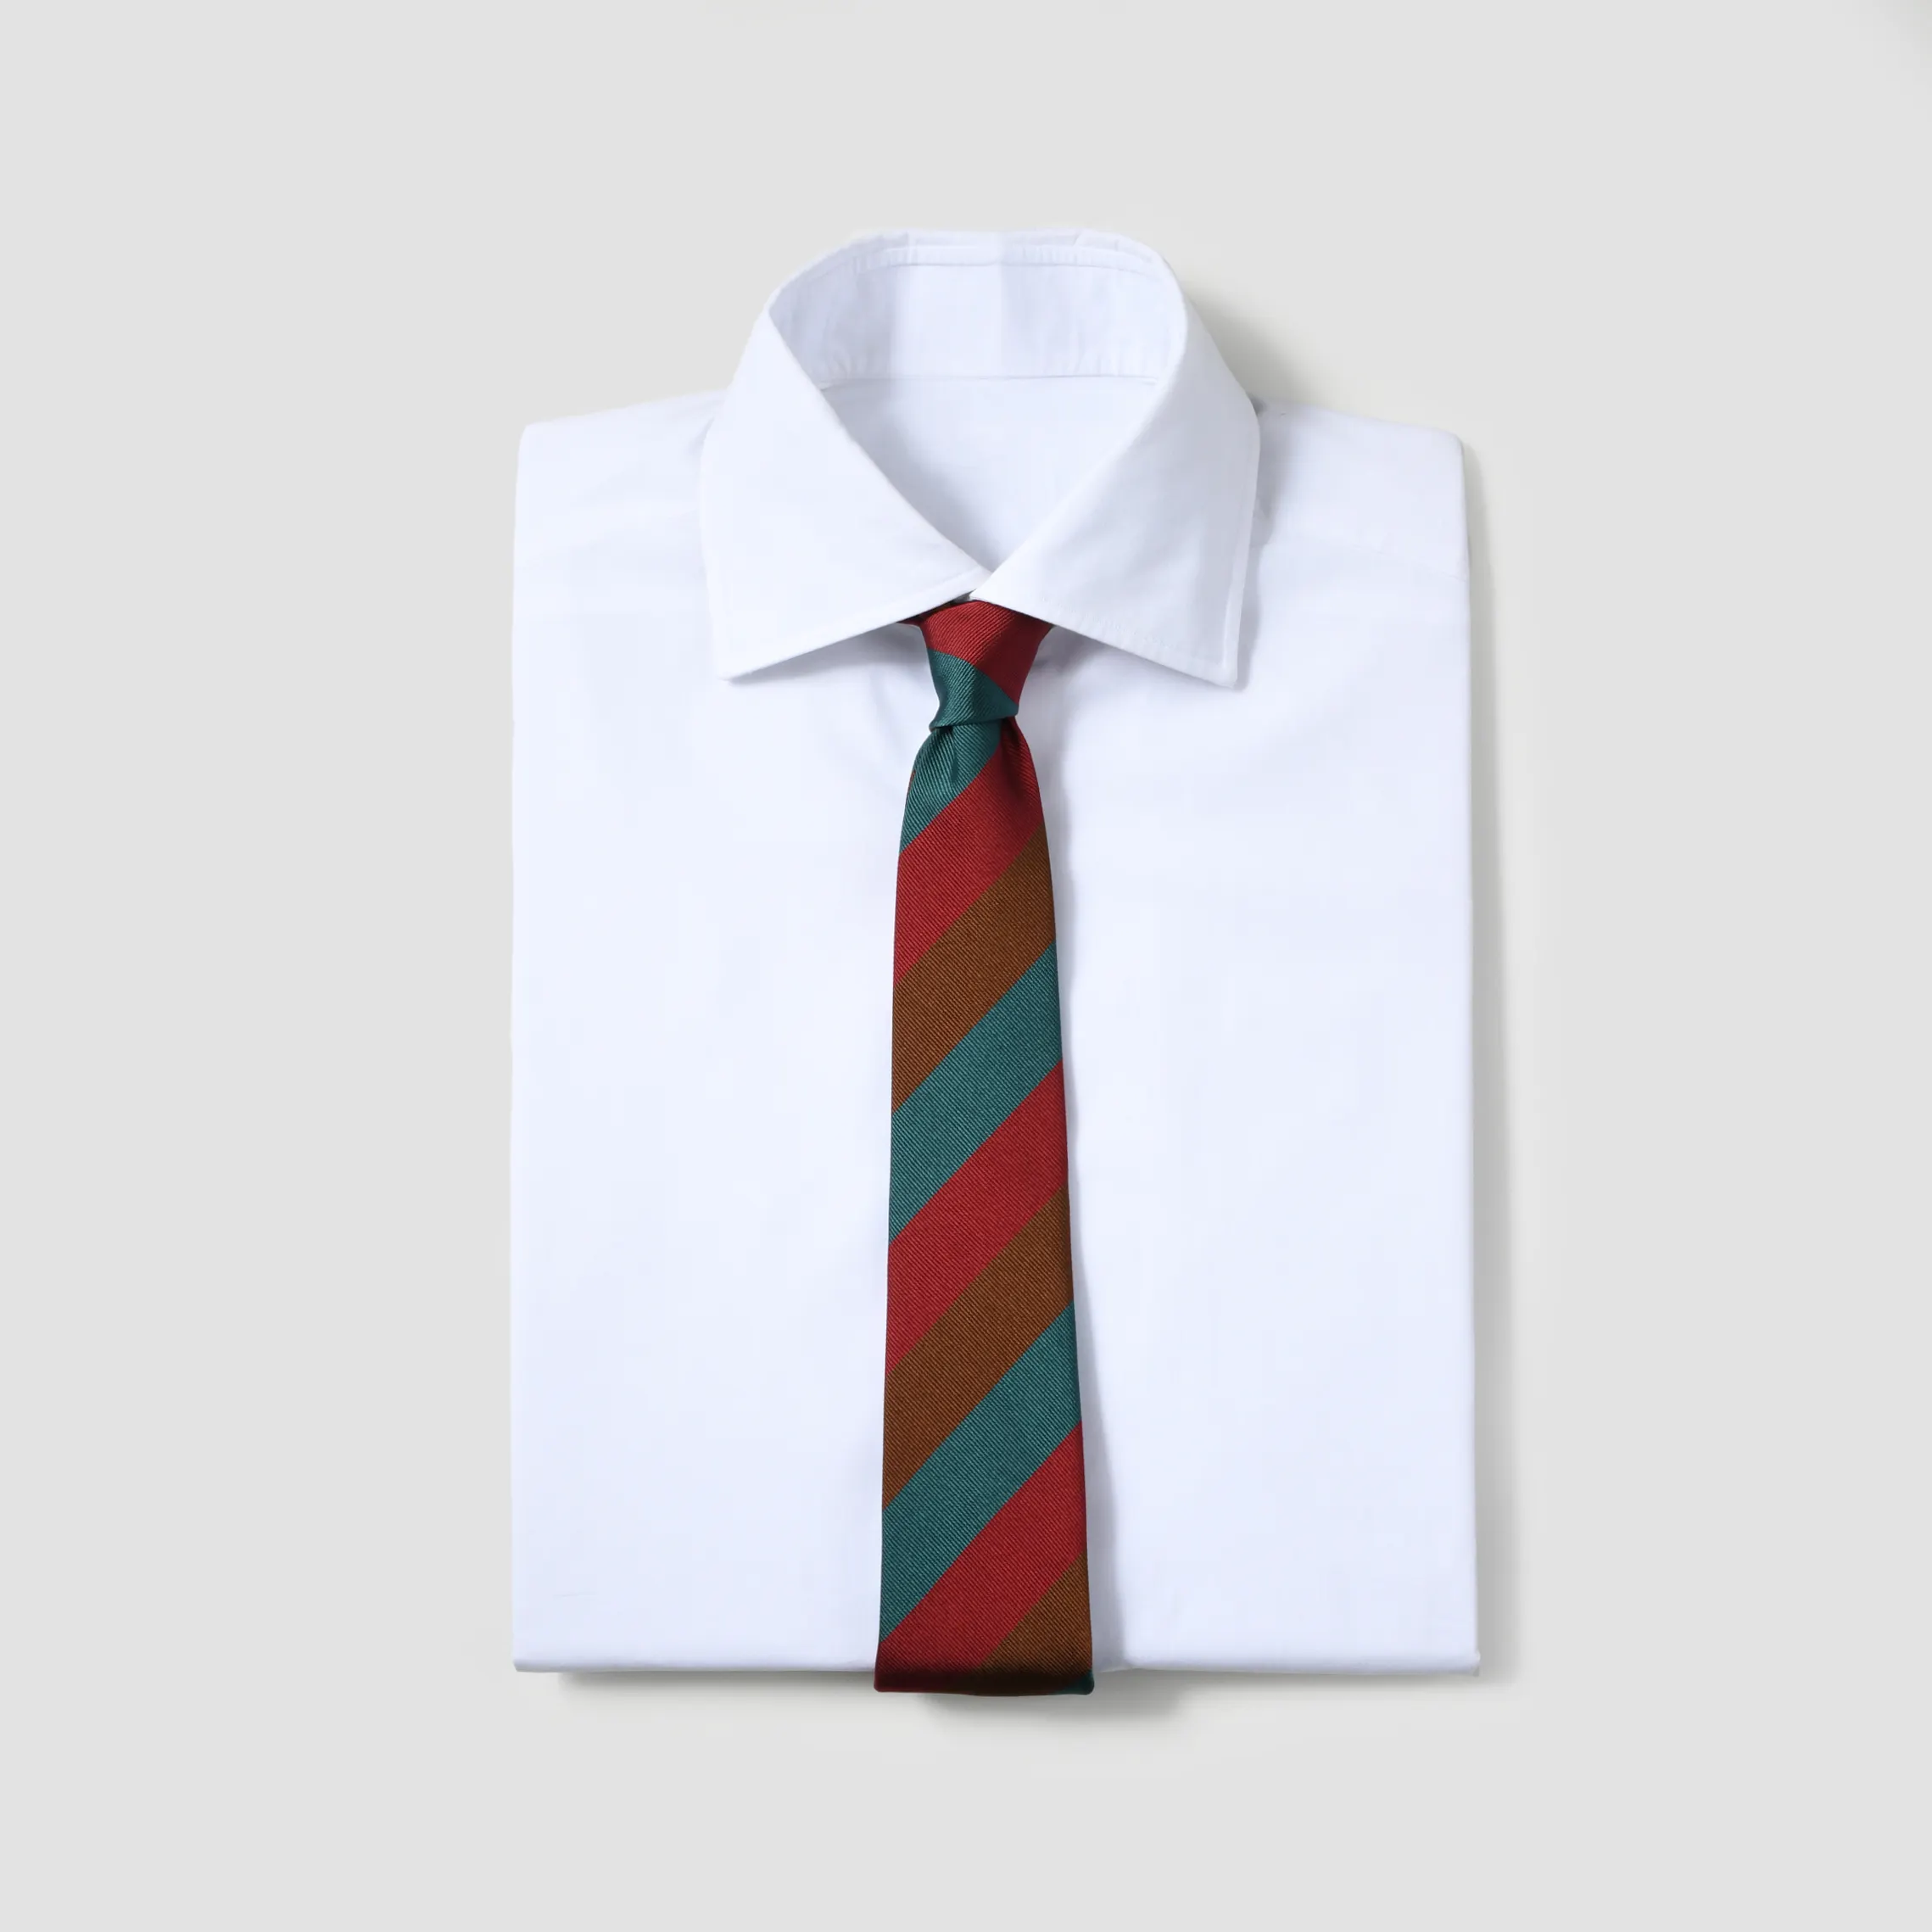 Luxury Handwoven Linen Necktie - Italian Unlined Elegance - A Versatile Statement For All Occasions